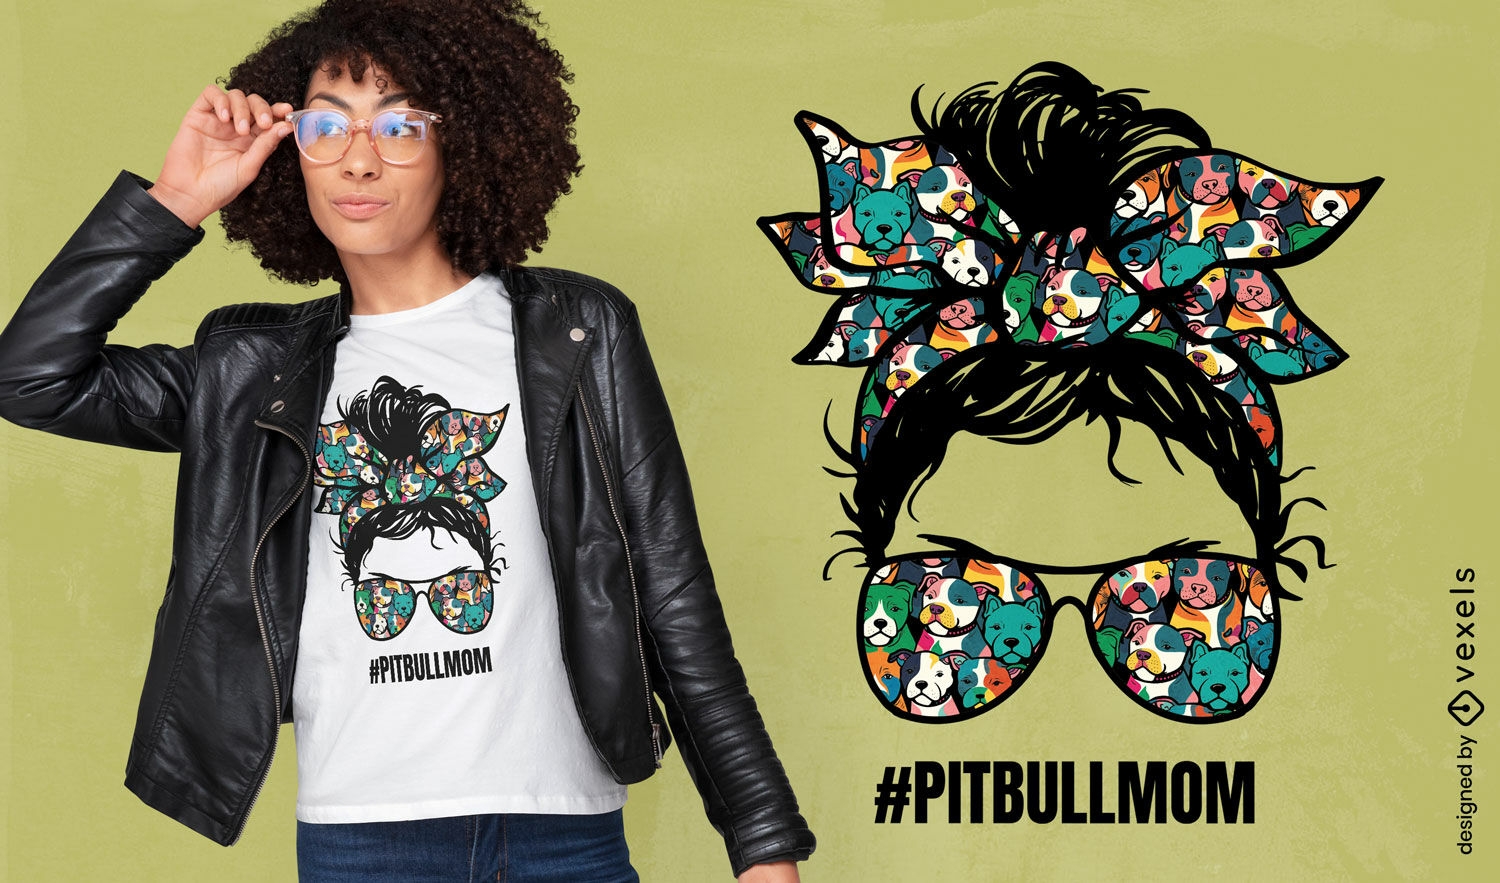 Pitbull mom t-shirt design